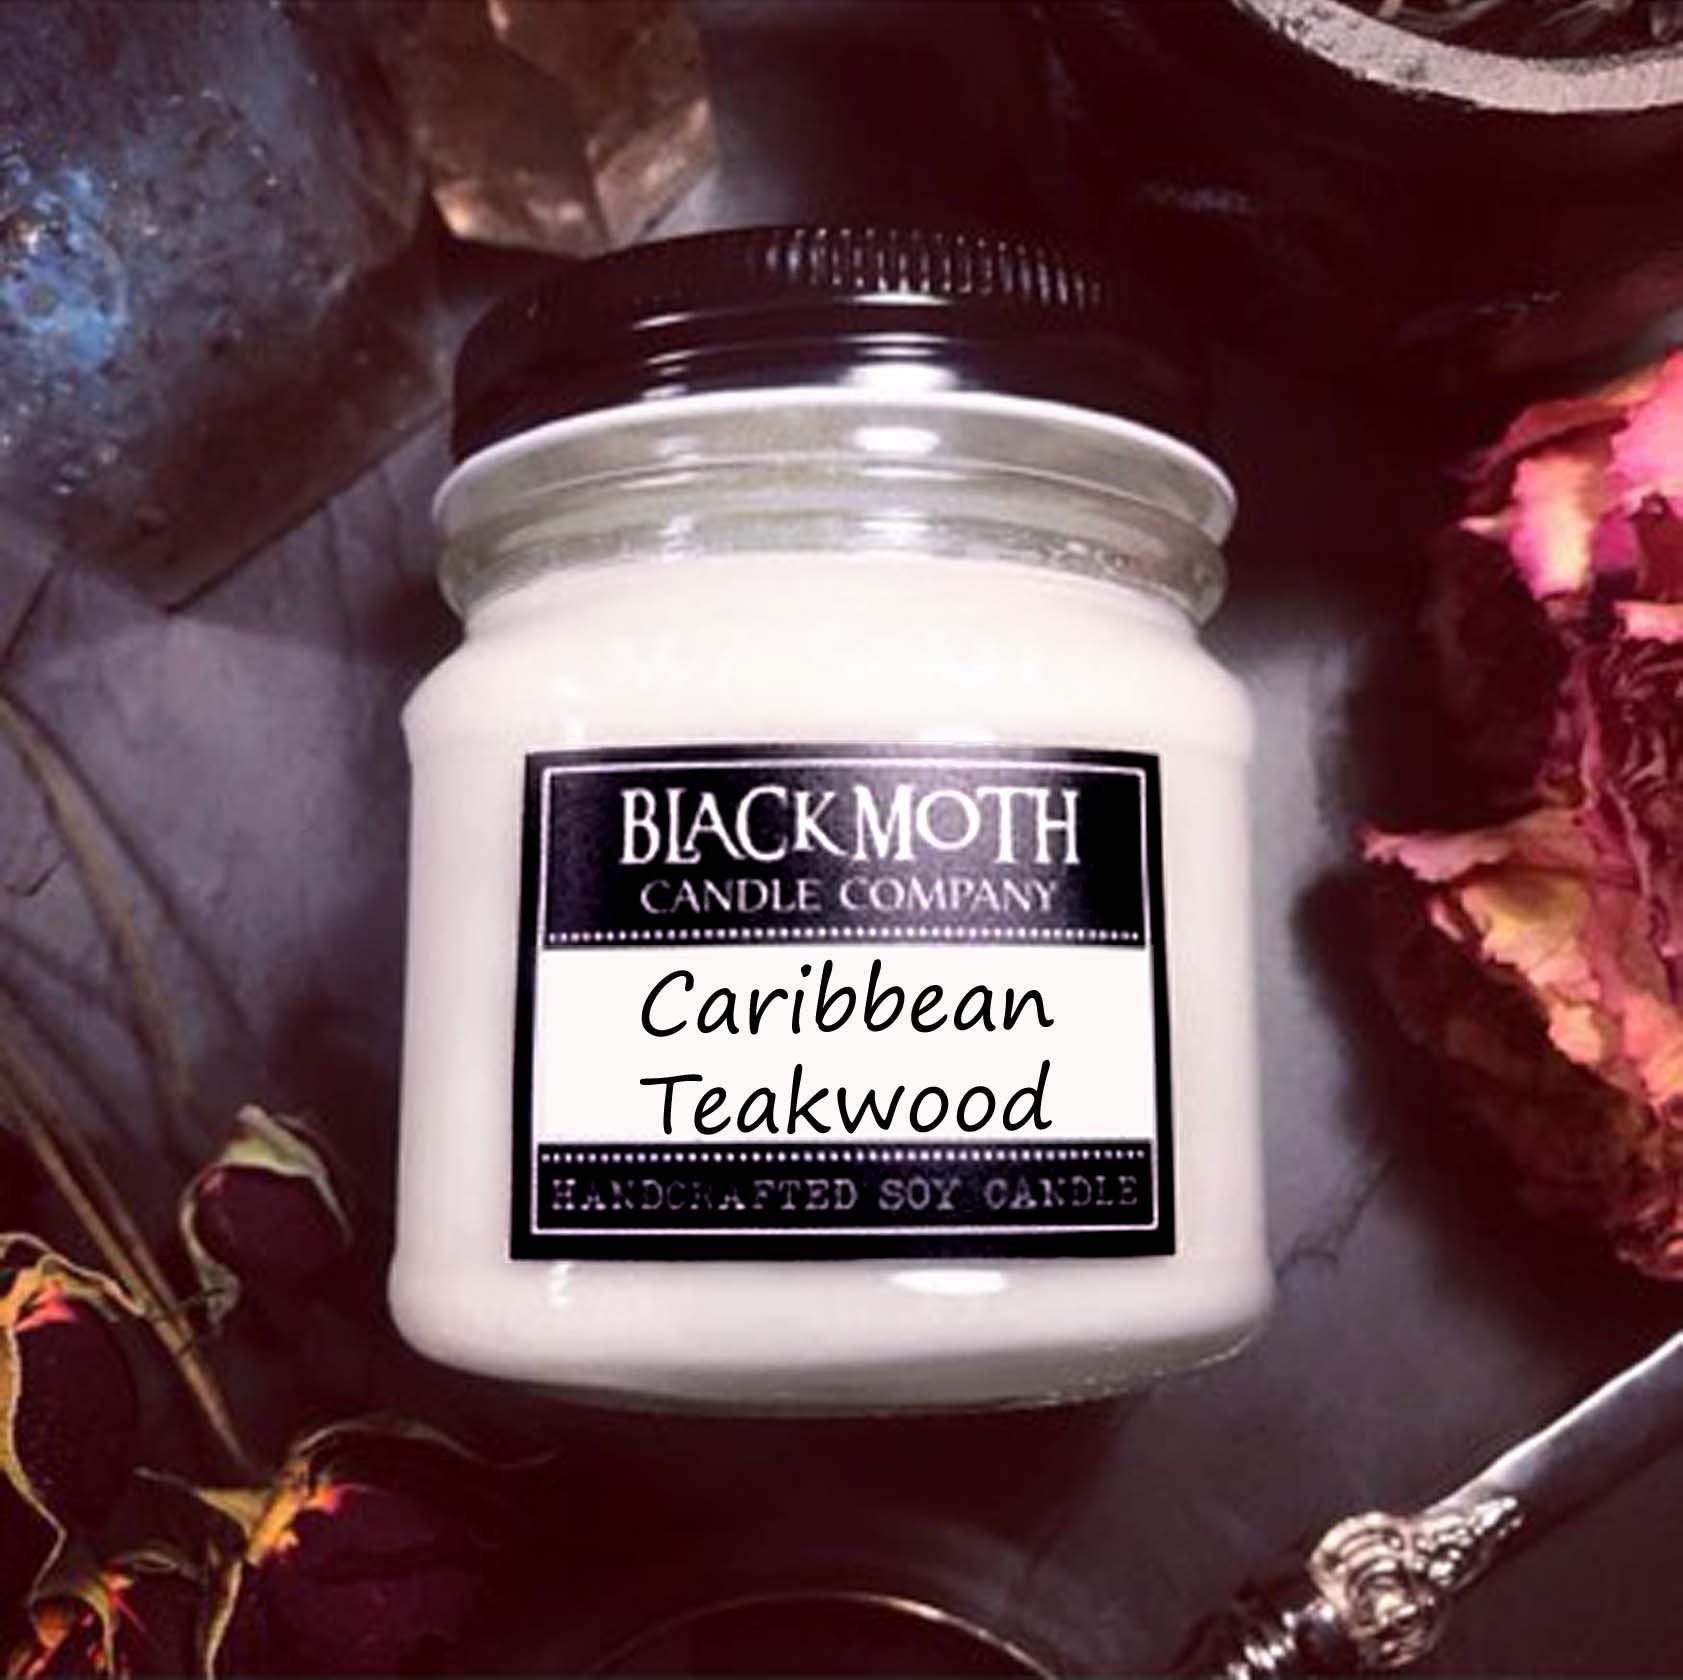 8 oz Caribbean Teakwood Scented Soy Candle in Mason Jar